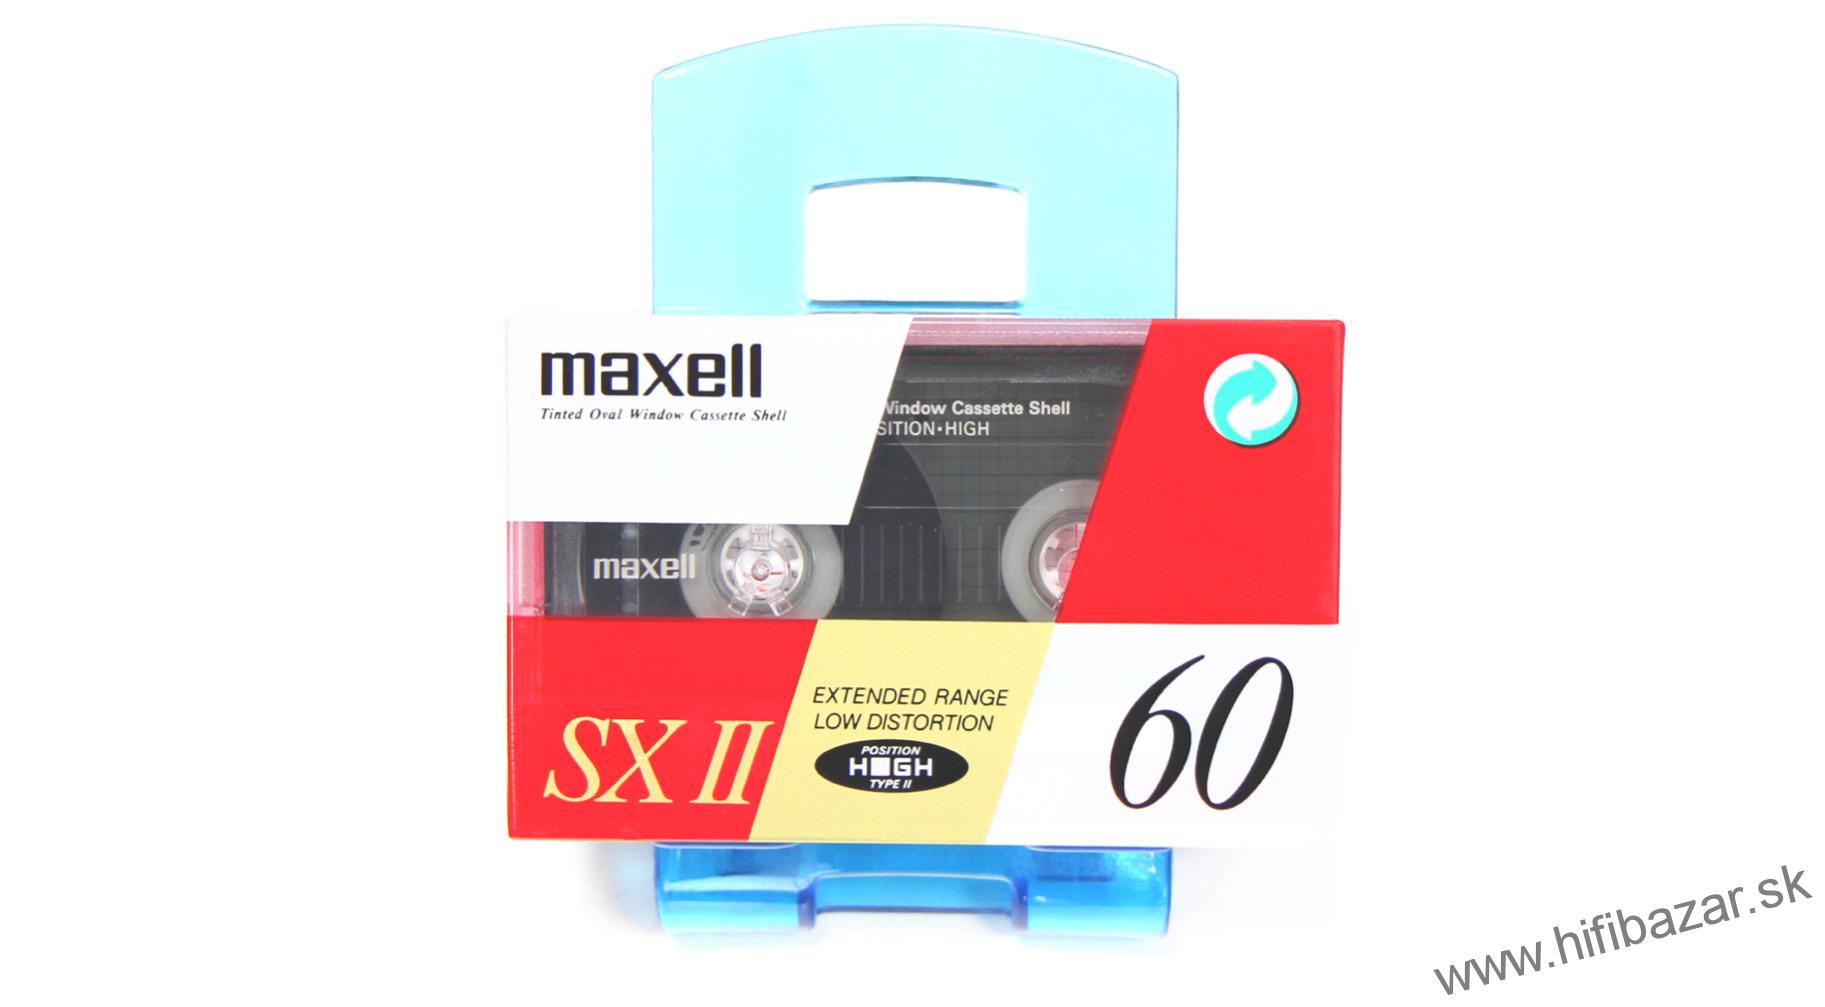 MAXELL SXII-60 Extended Range